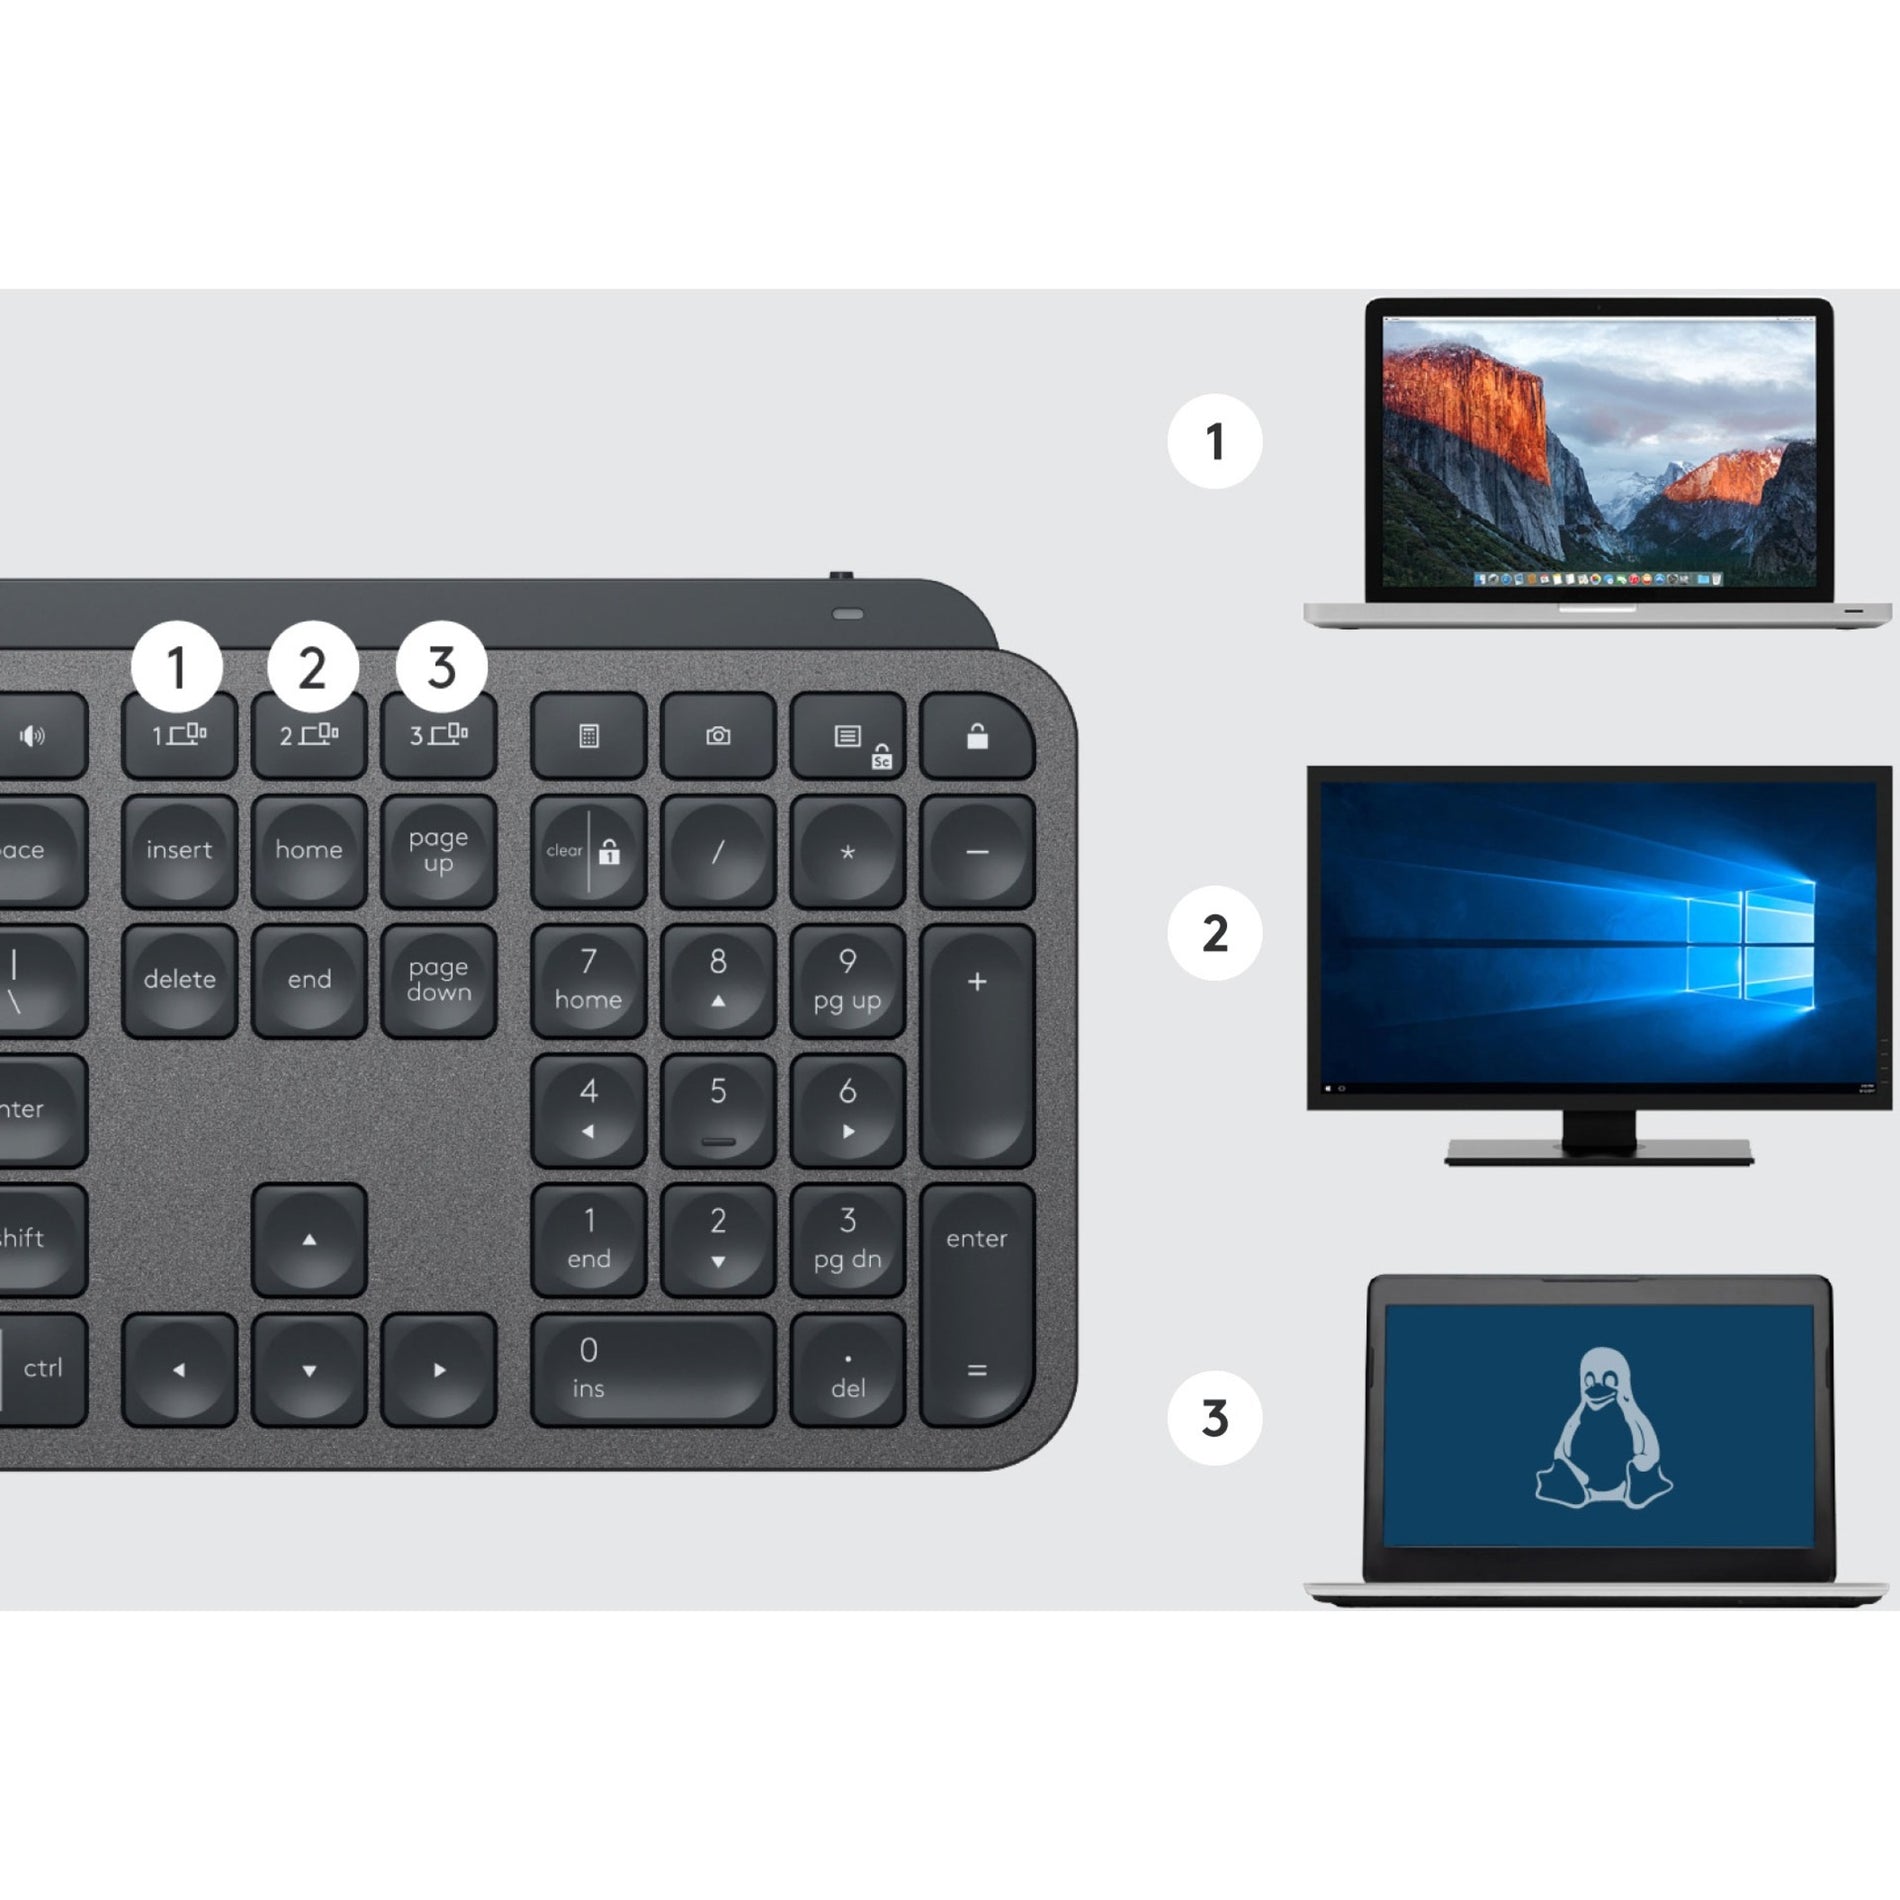 Logitech 920-010116 MX Keys for Business Keyboard, Wireless Bluetooth, Backlit, Multi-Device Support